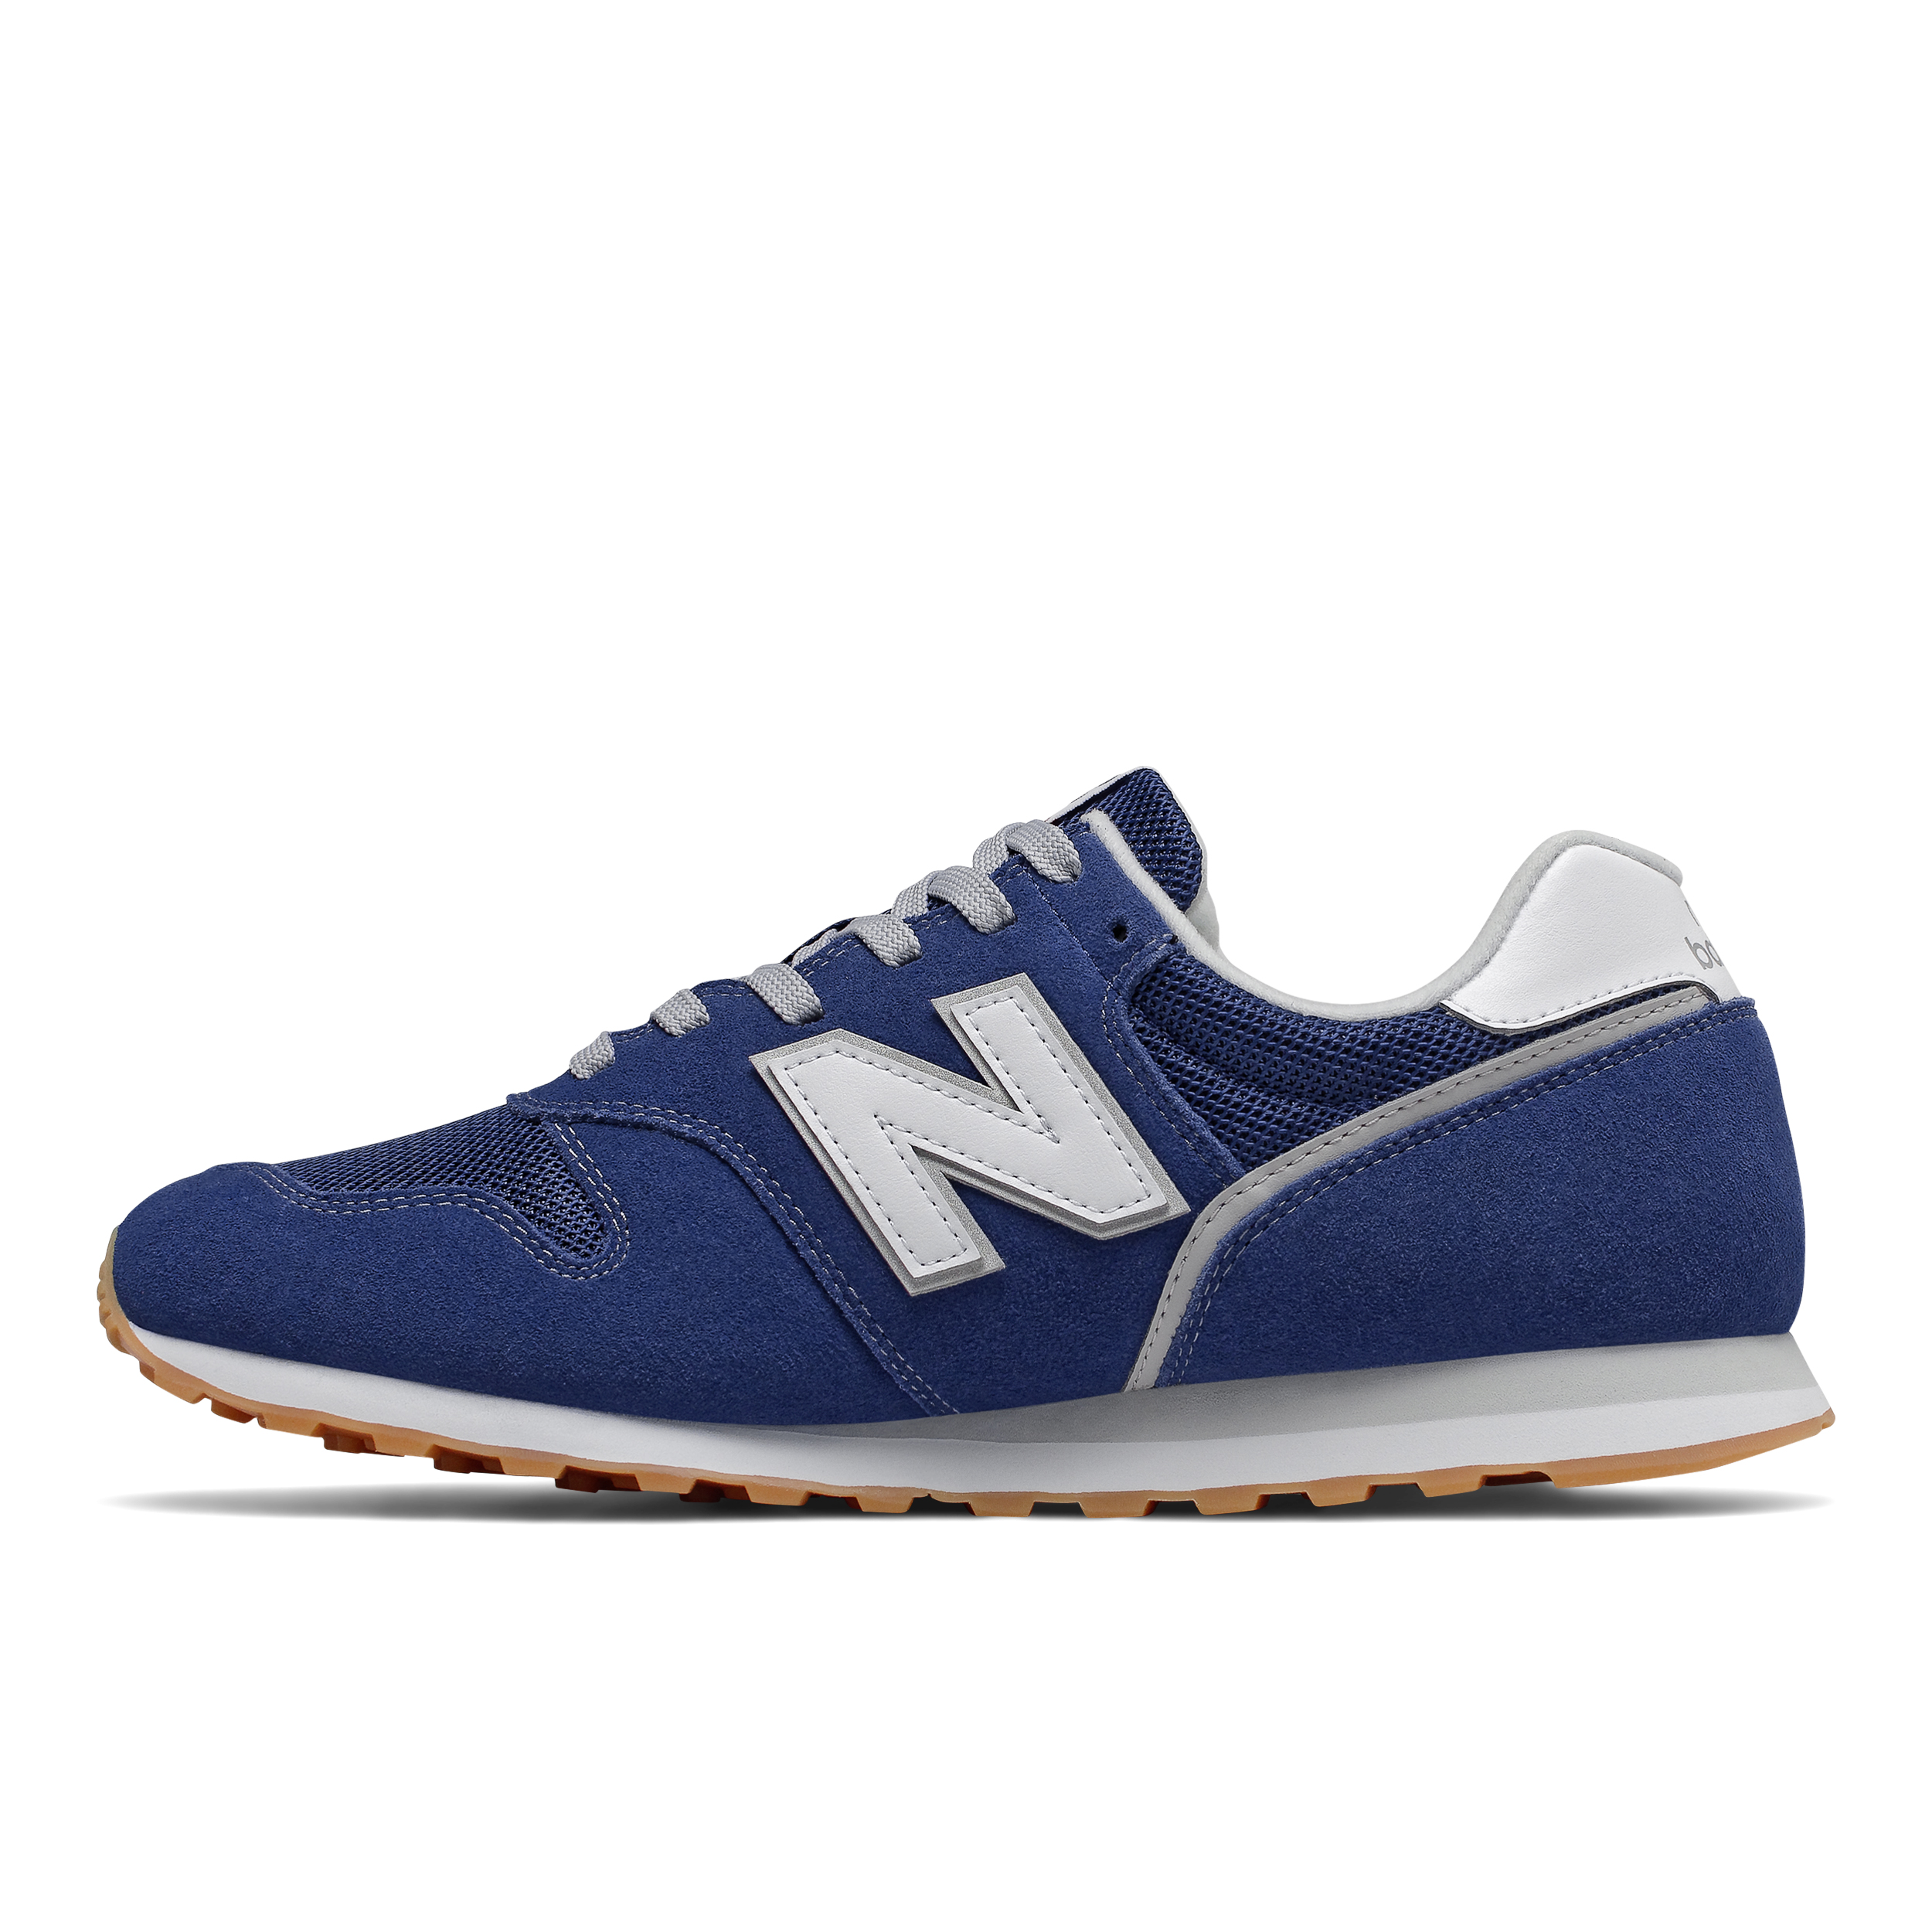 New Balance 373 Classic for Men (Blue White) Lifestyle Shoes | Lazada PH